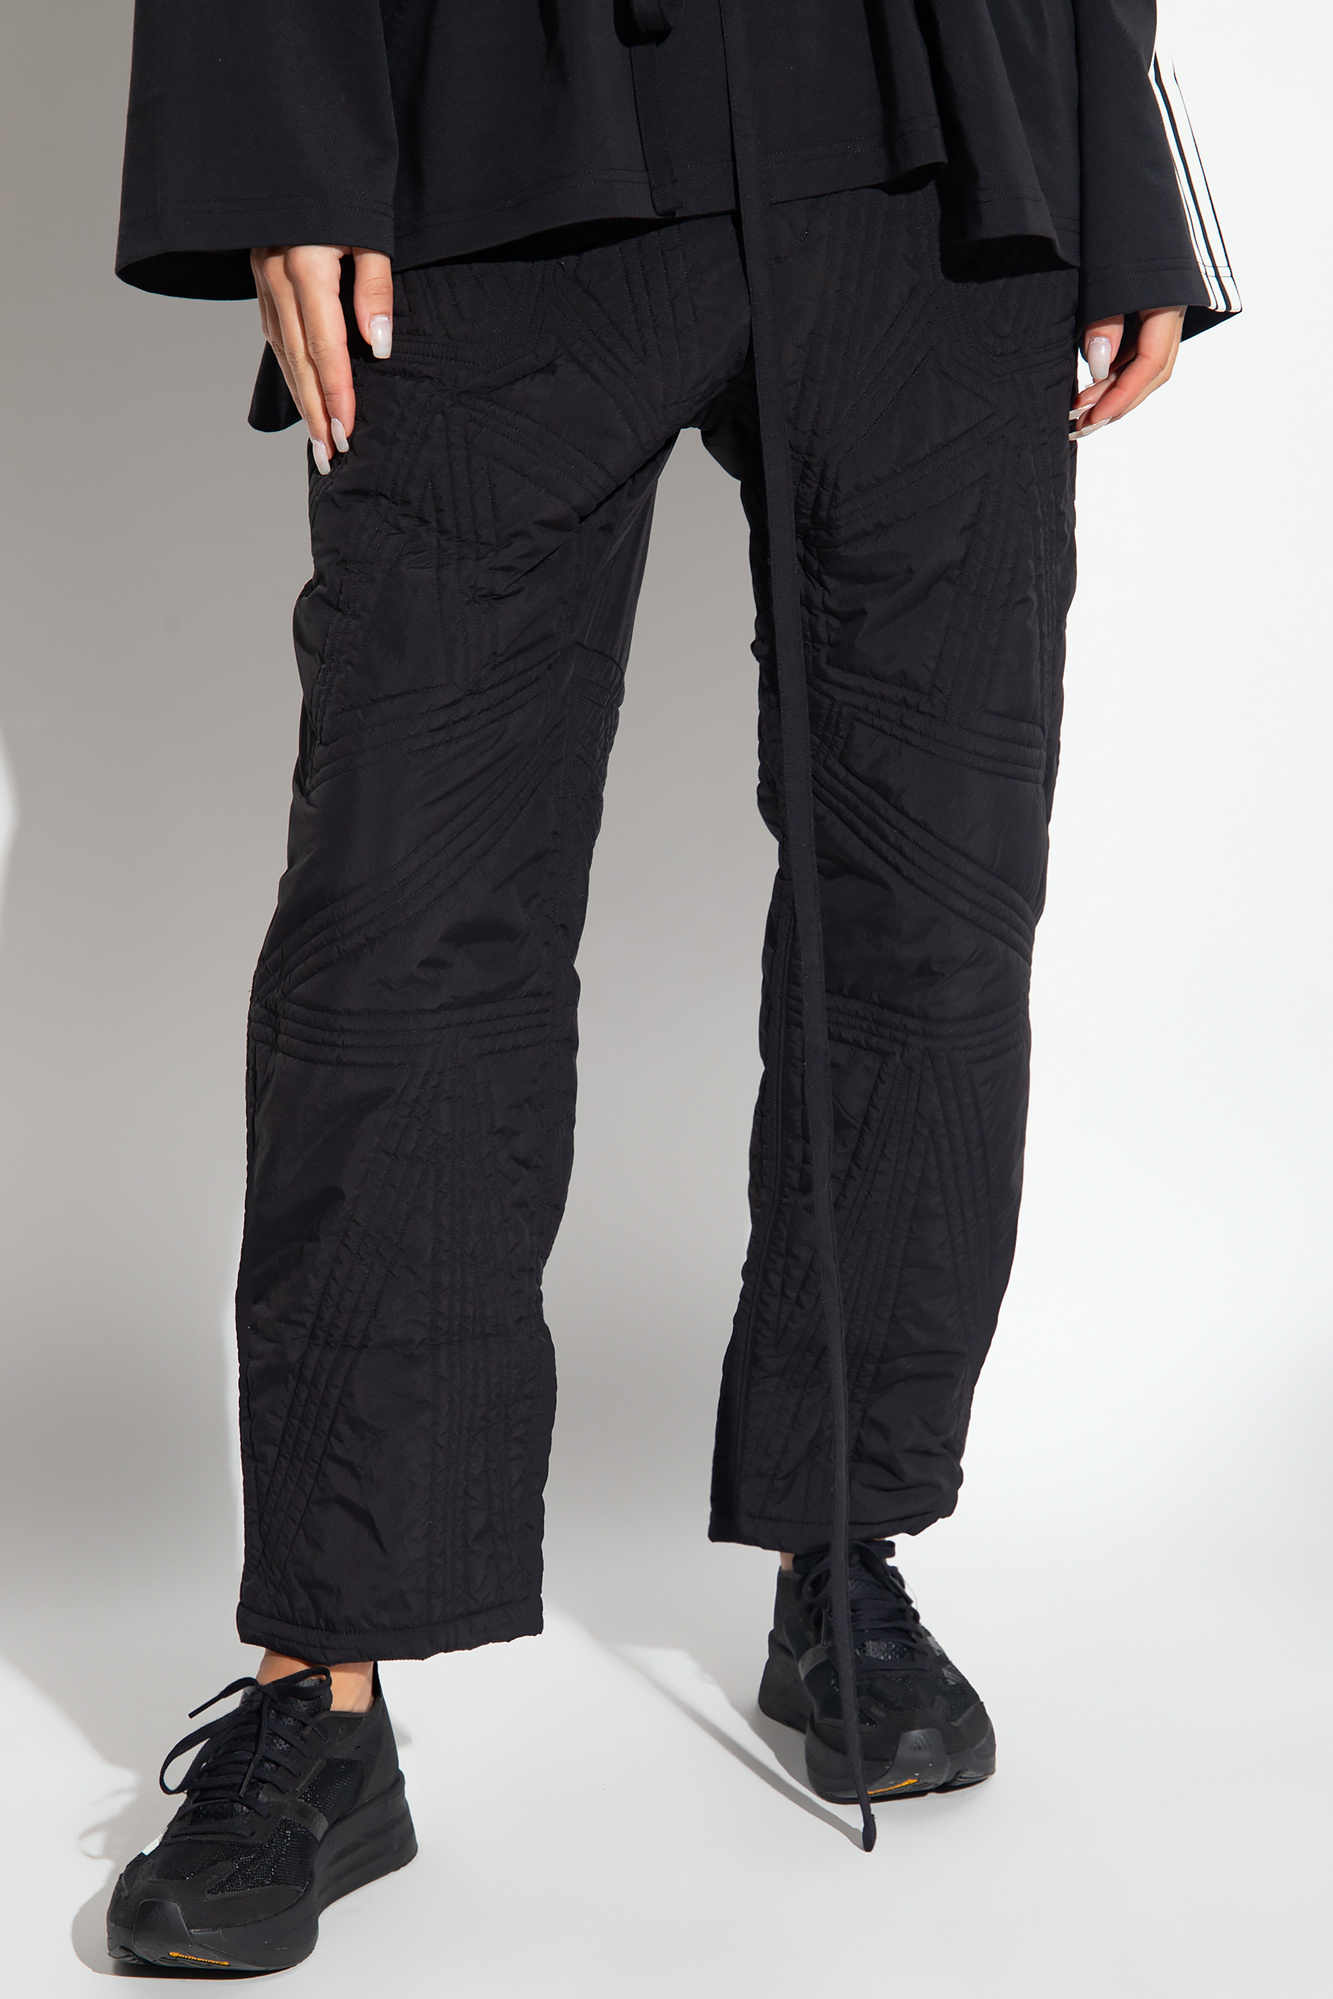 Black Insulated quilted trousers Y-3 Yohji Yamamoto - Vitkac Canada